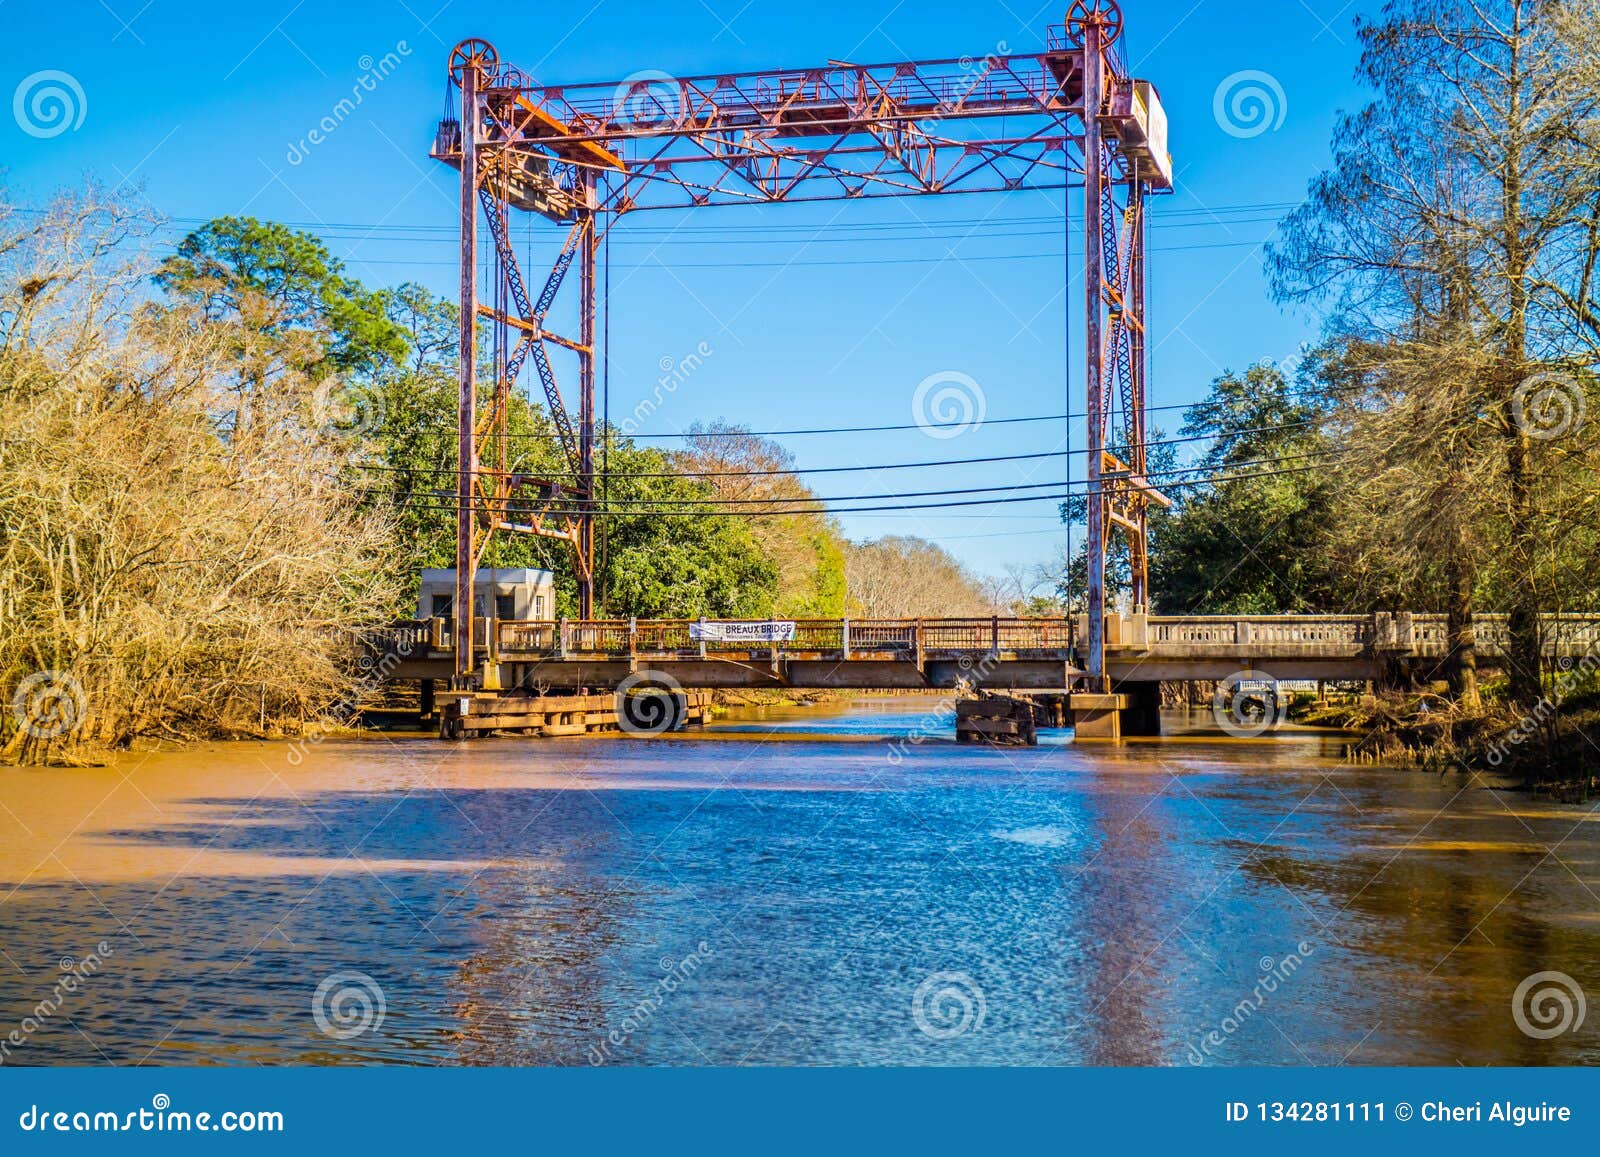 A Breaux Bridge in St. Martin Parish, Louisiana Stock Image - Image of